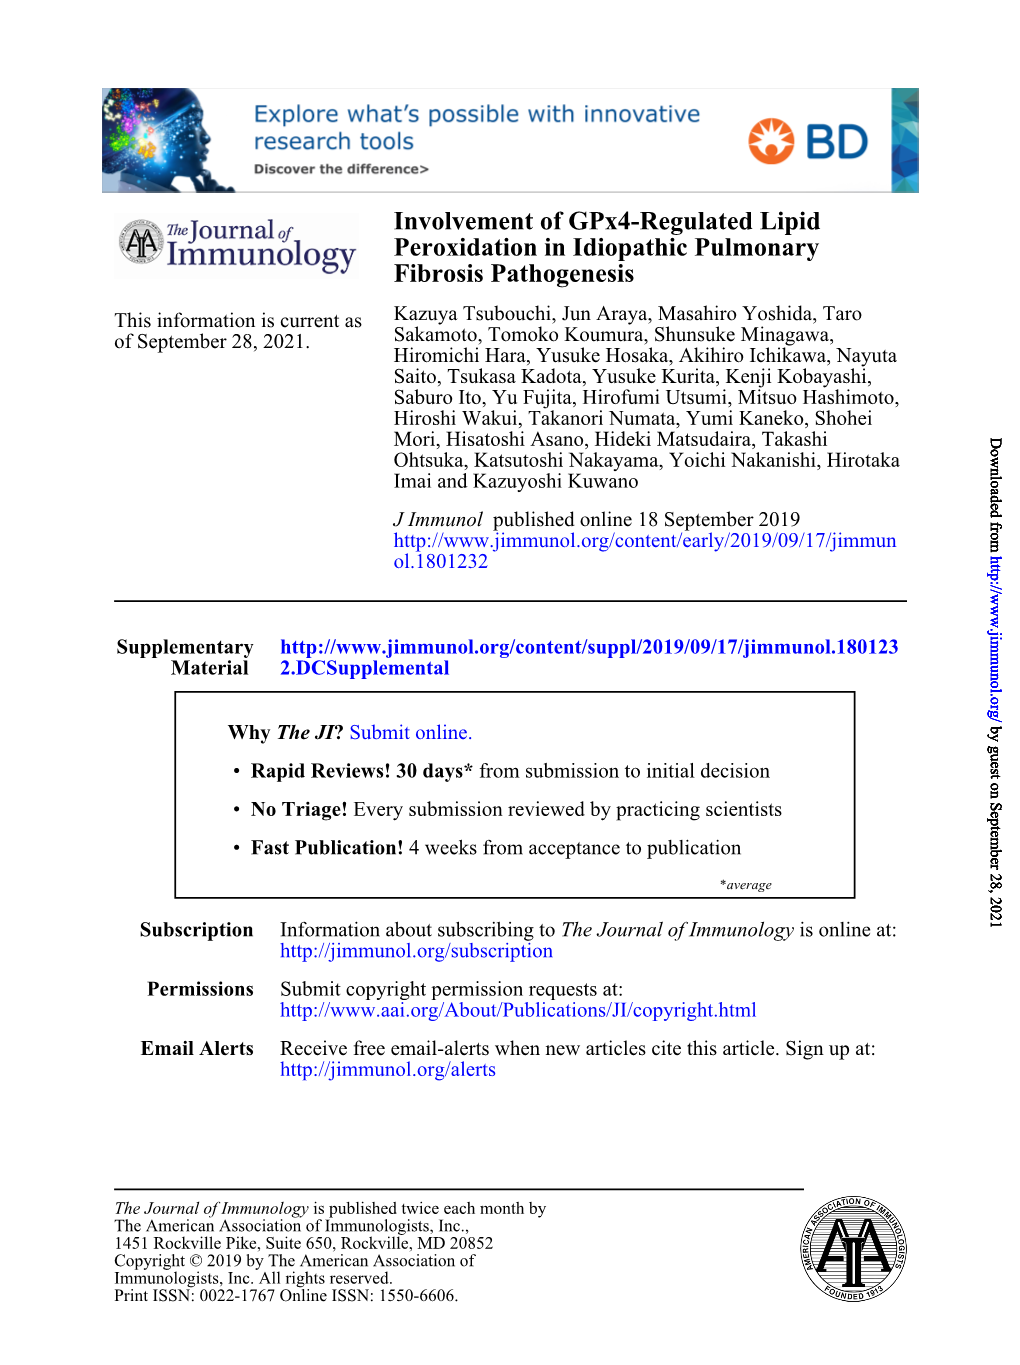 Involvement of Gpx4-Regulated Lipid Peroxidation in Idiopathic Pulmonary Fibrosis Pathogenesis